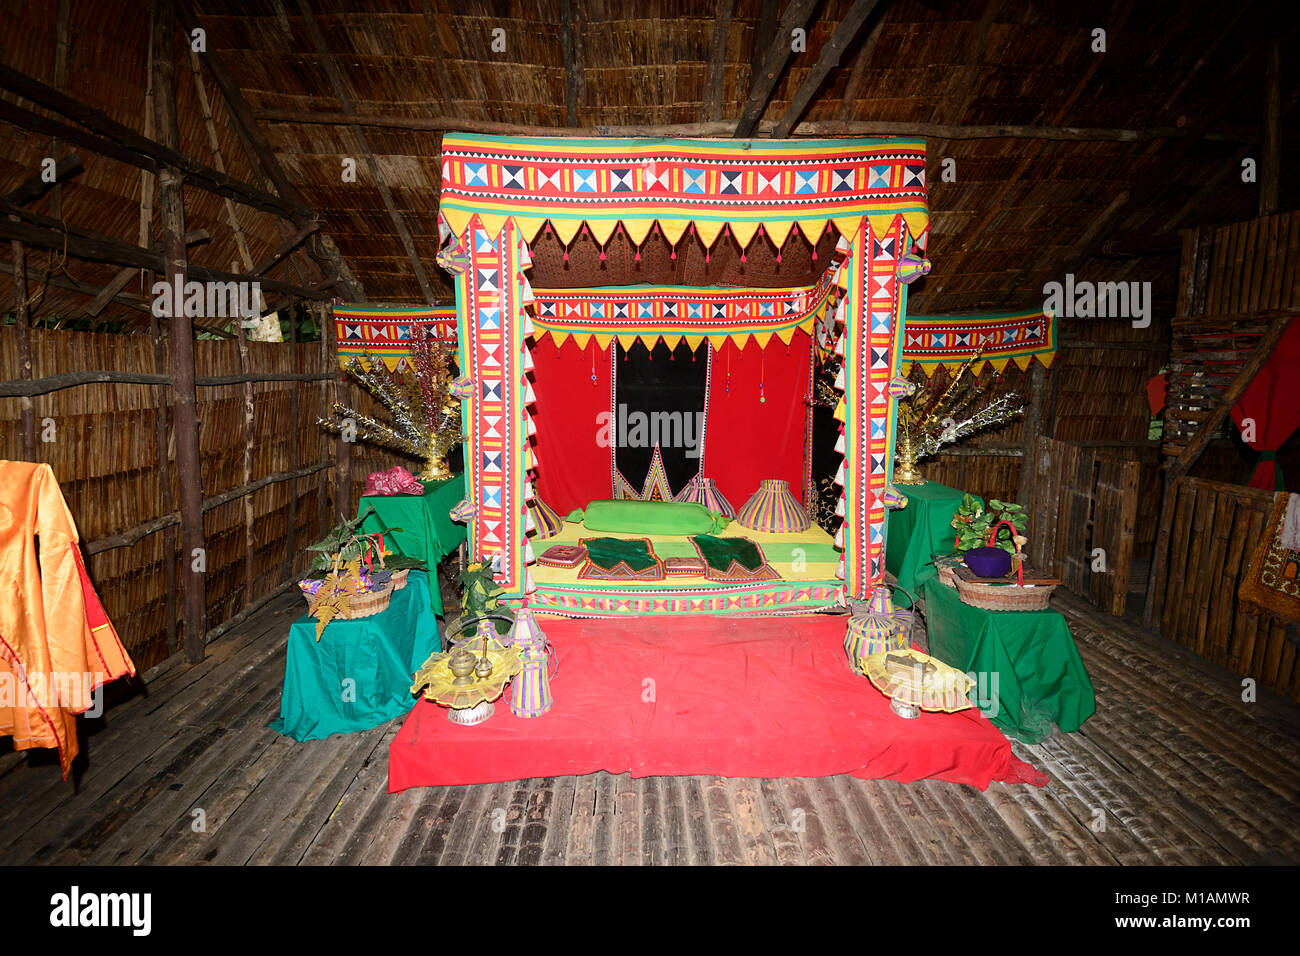 Ornate bed in a traditional longhouse, Mari Mari Cultural Village, Kota Kinabalu, Sabah, Borneo, Malaysia Stock Photo